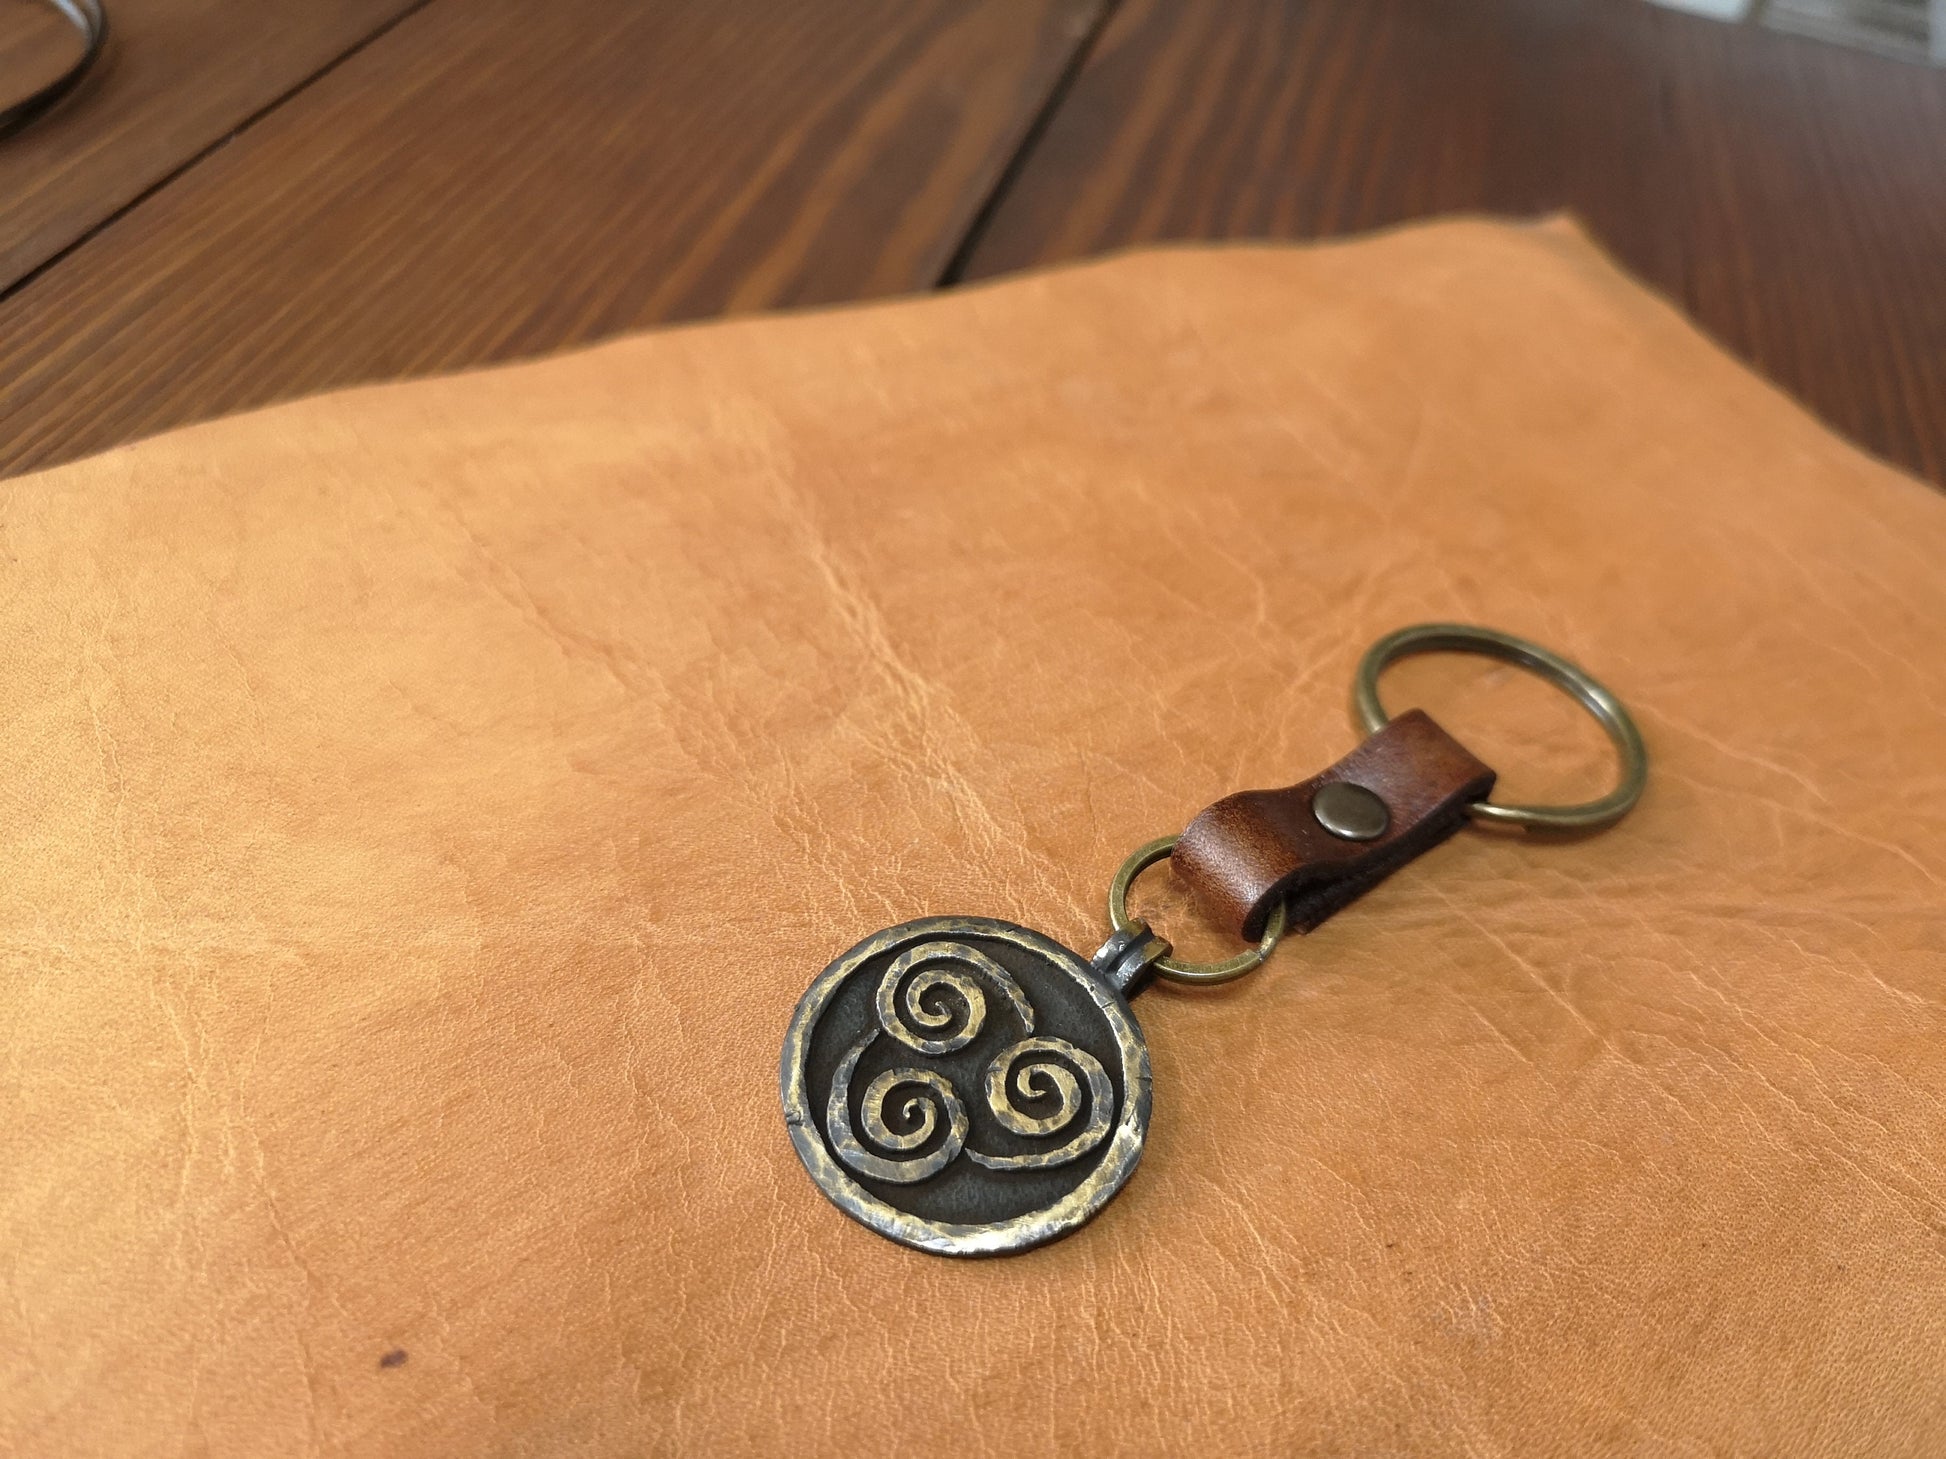 Avatar The Last Airbender Keychain  Air Nomad Nation Accessory - Baldur Jewelry